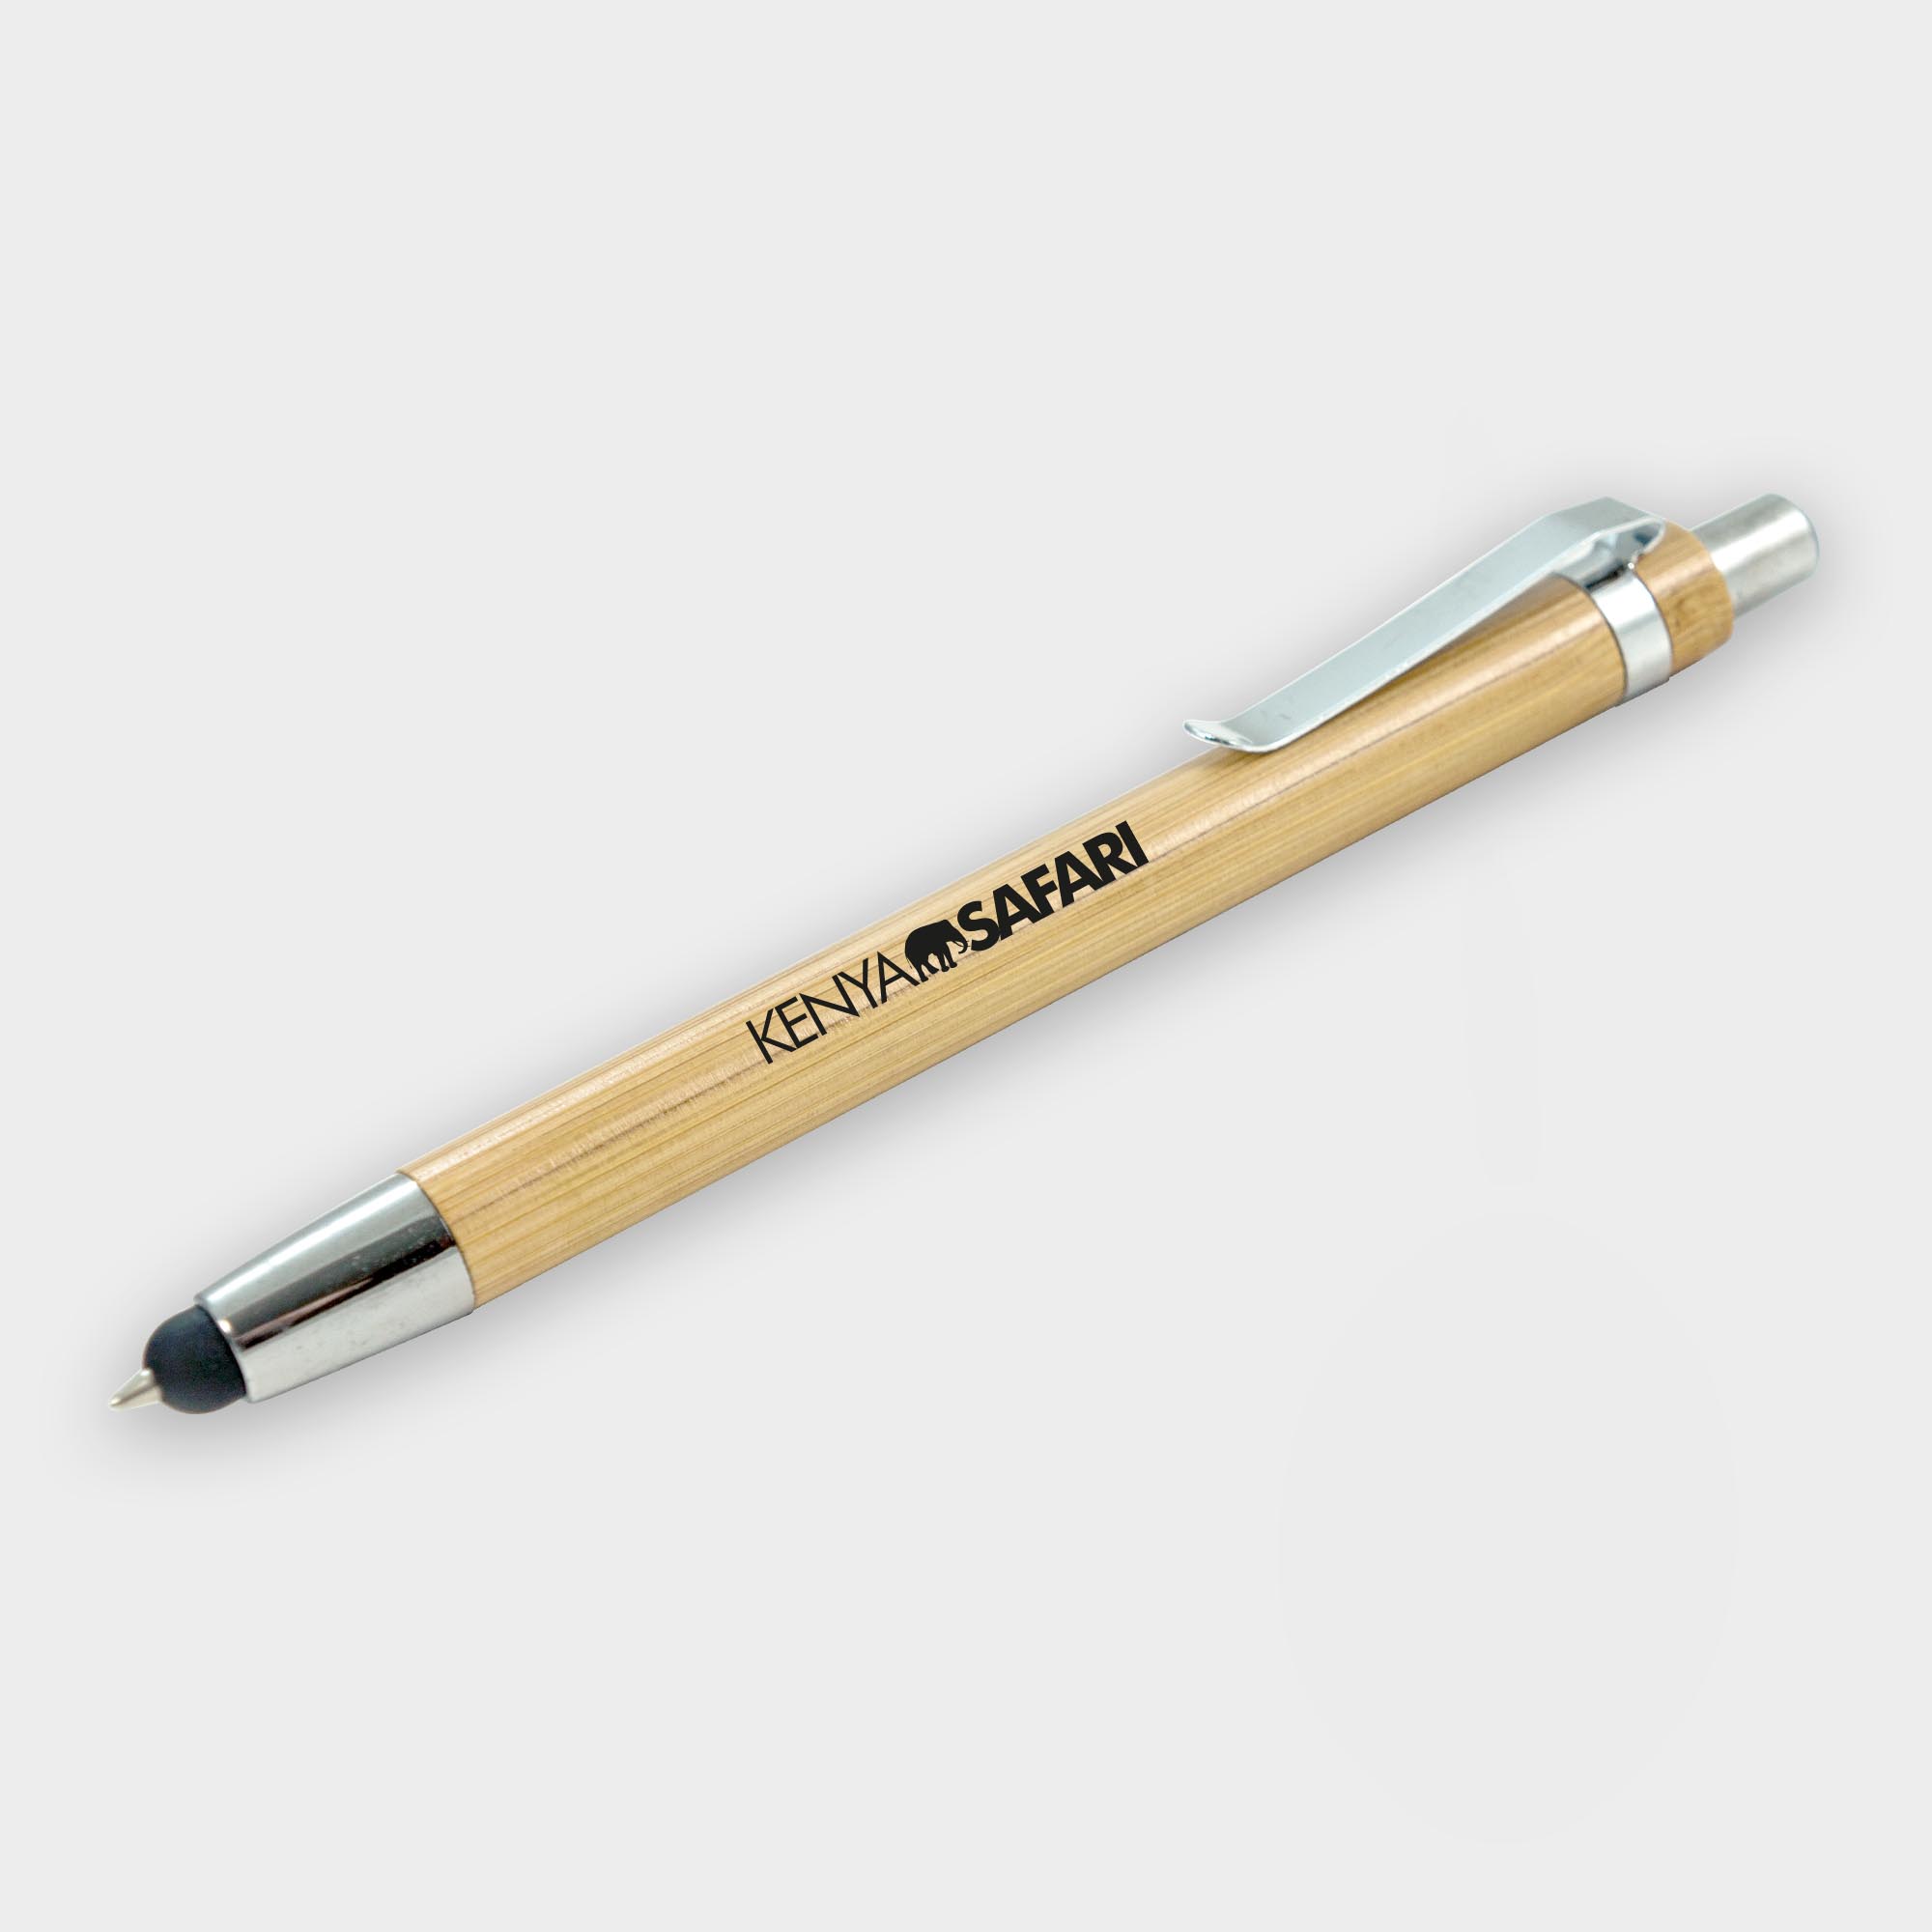 Stylus pen, bamboo